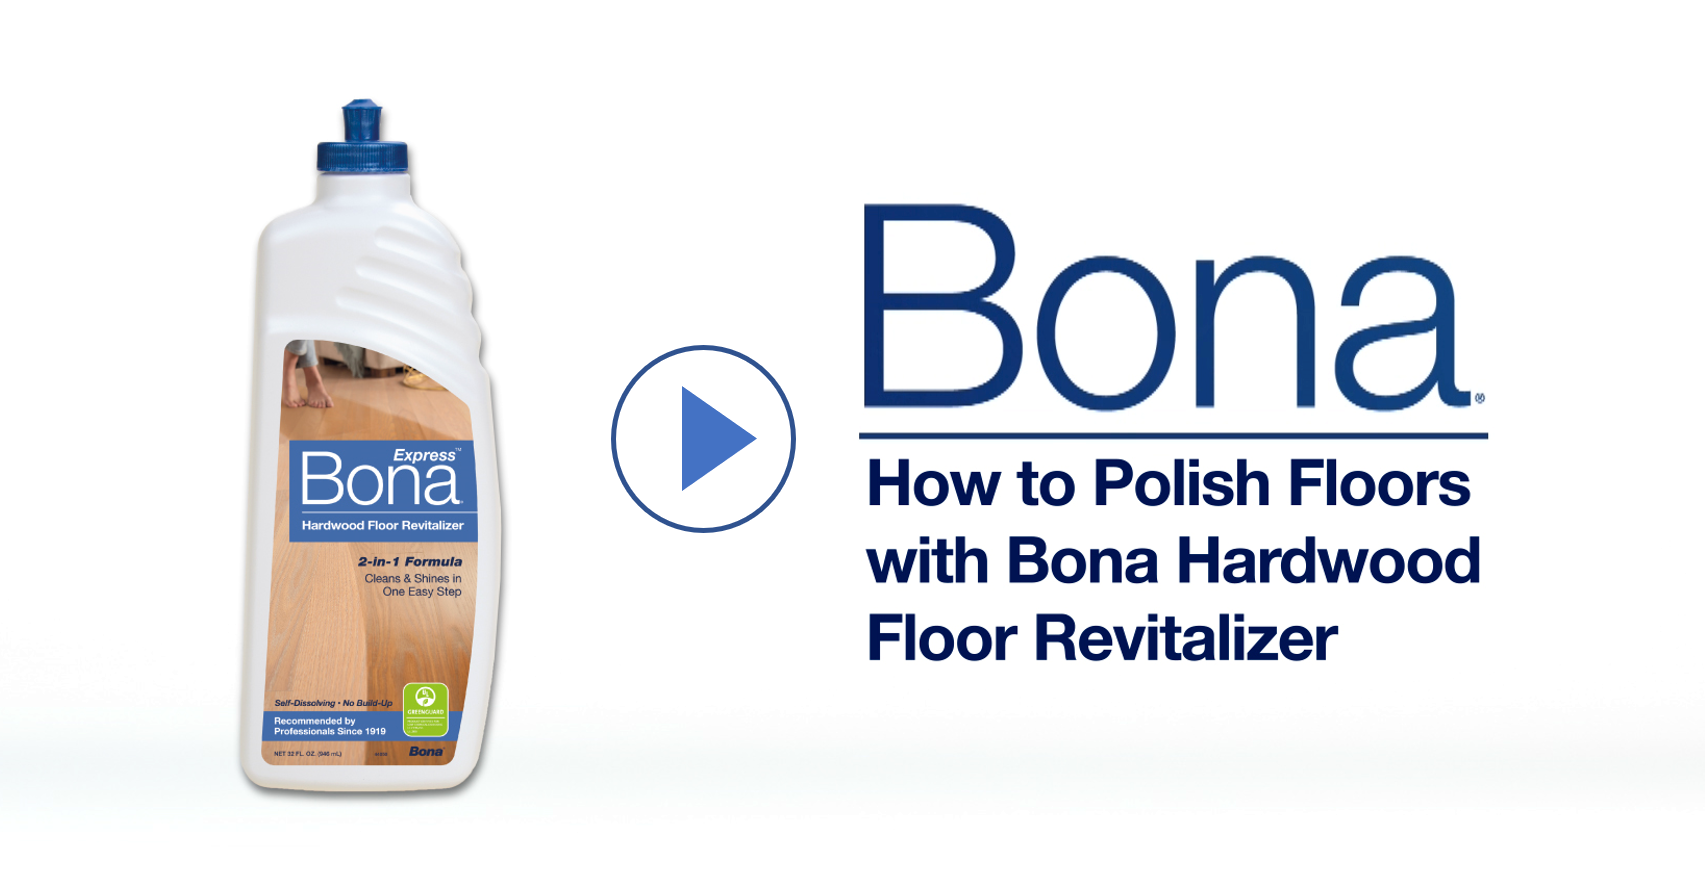 Bona Express Hardwood Floor, Professional Bona Hardwood Floor Cleaner